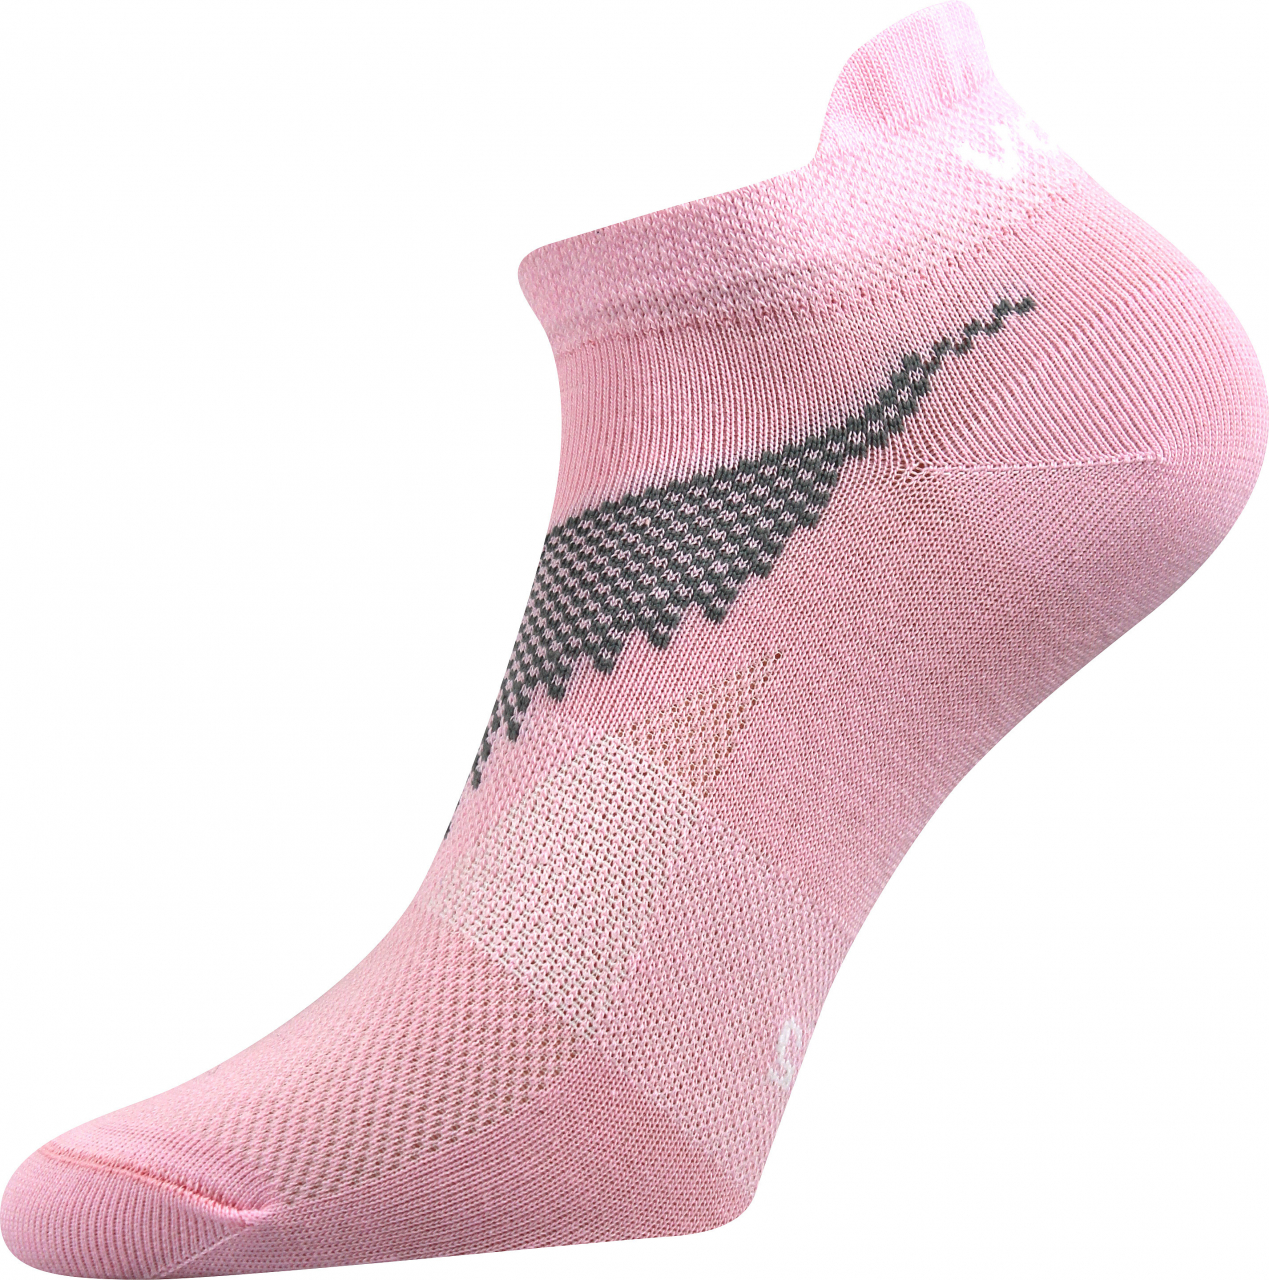 Ponožky sportovní nízké Voxx Iris - růžové, 35-38